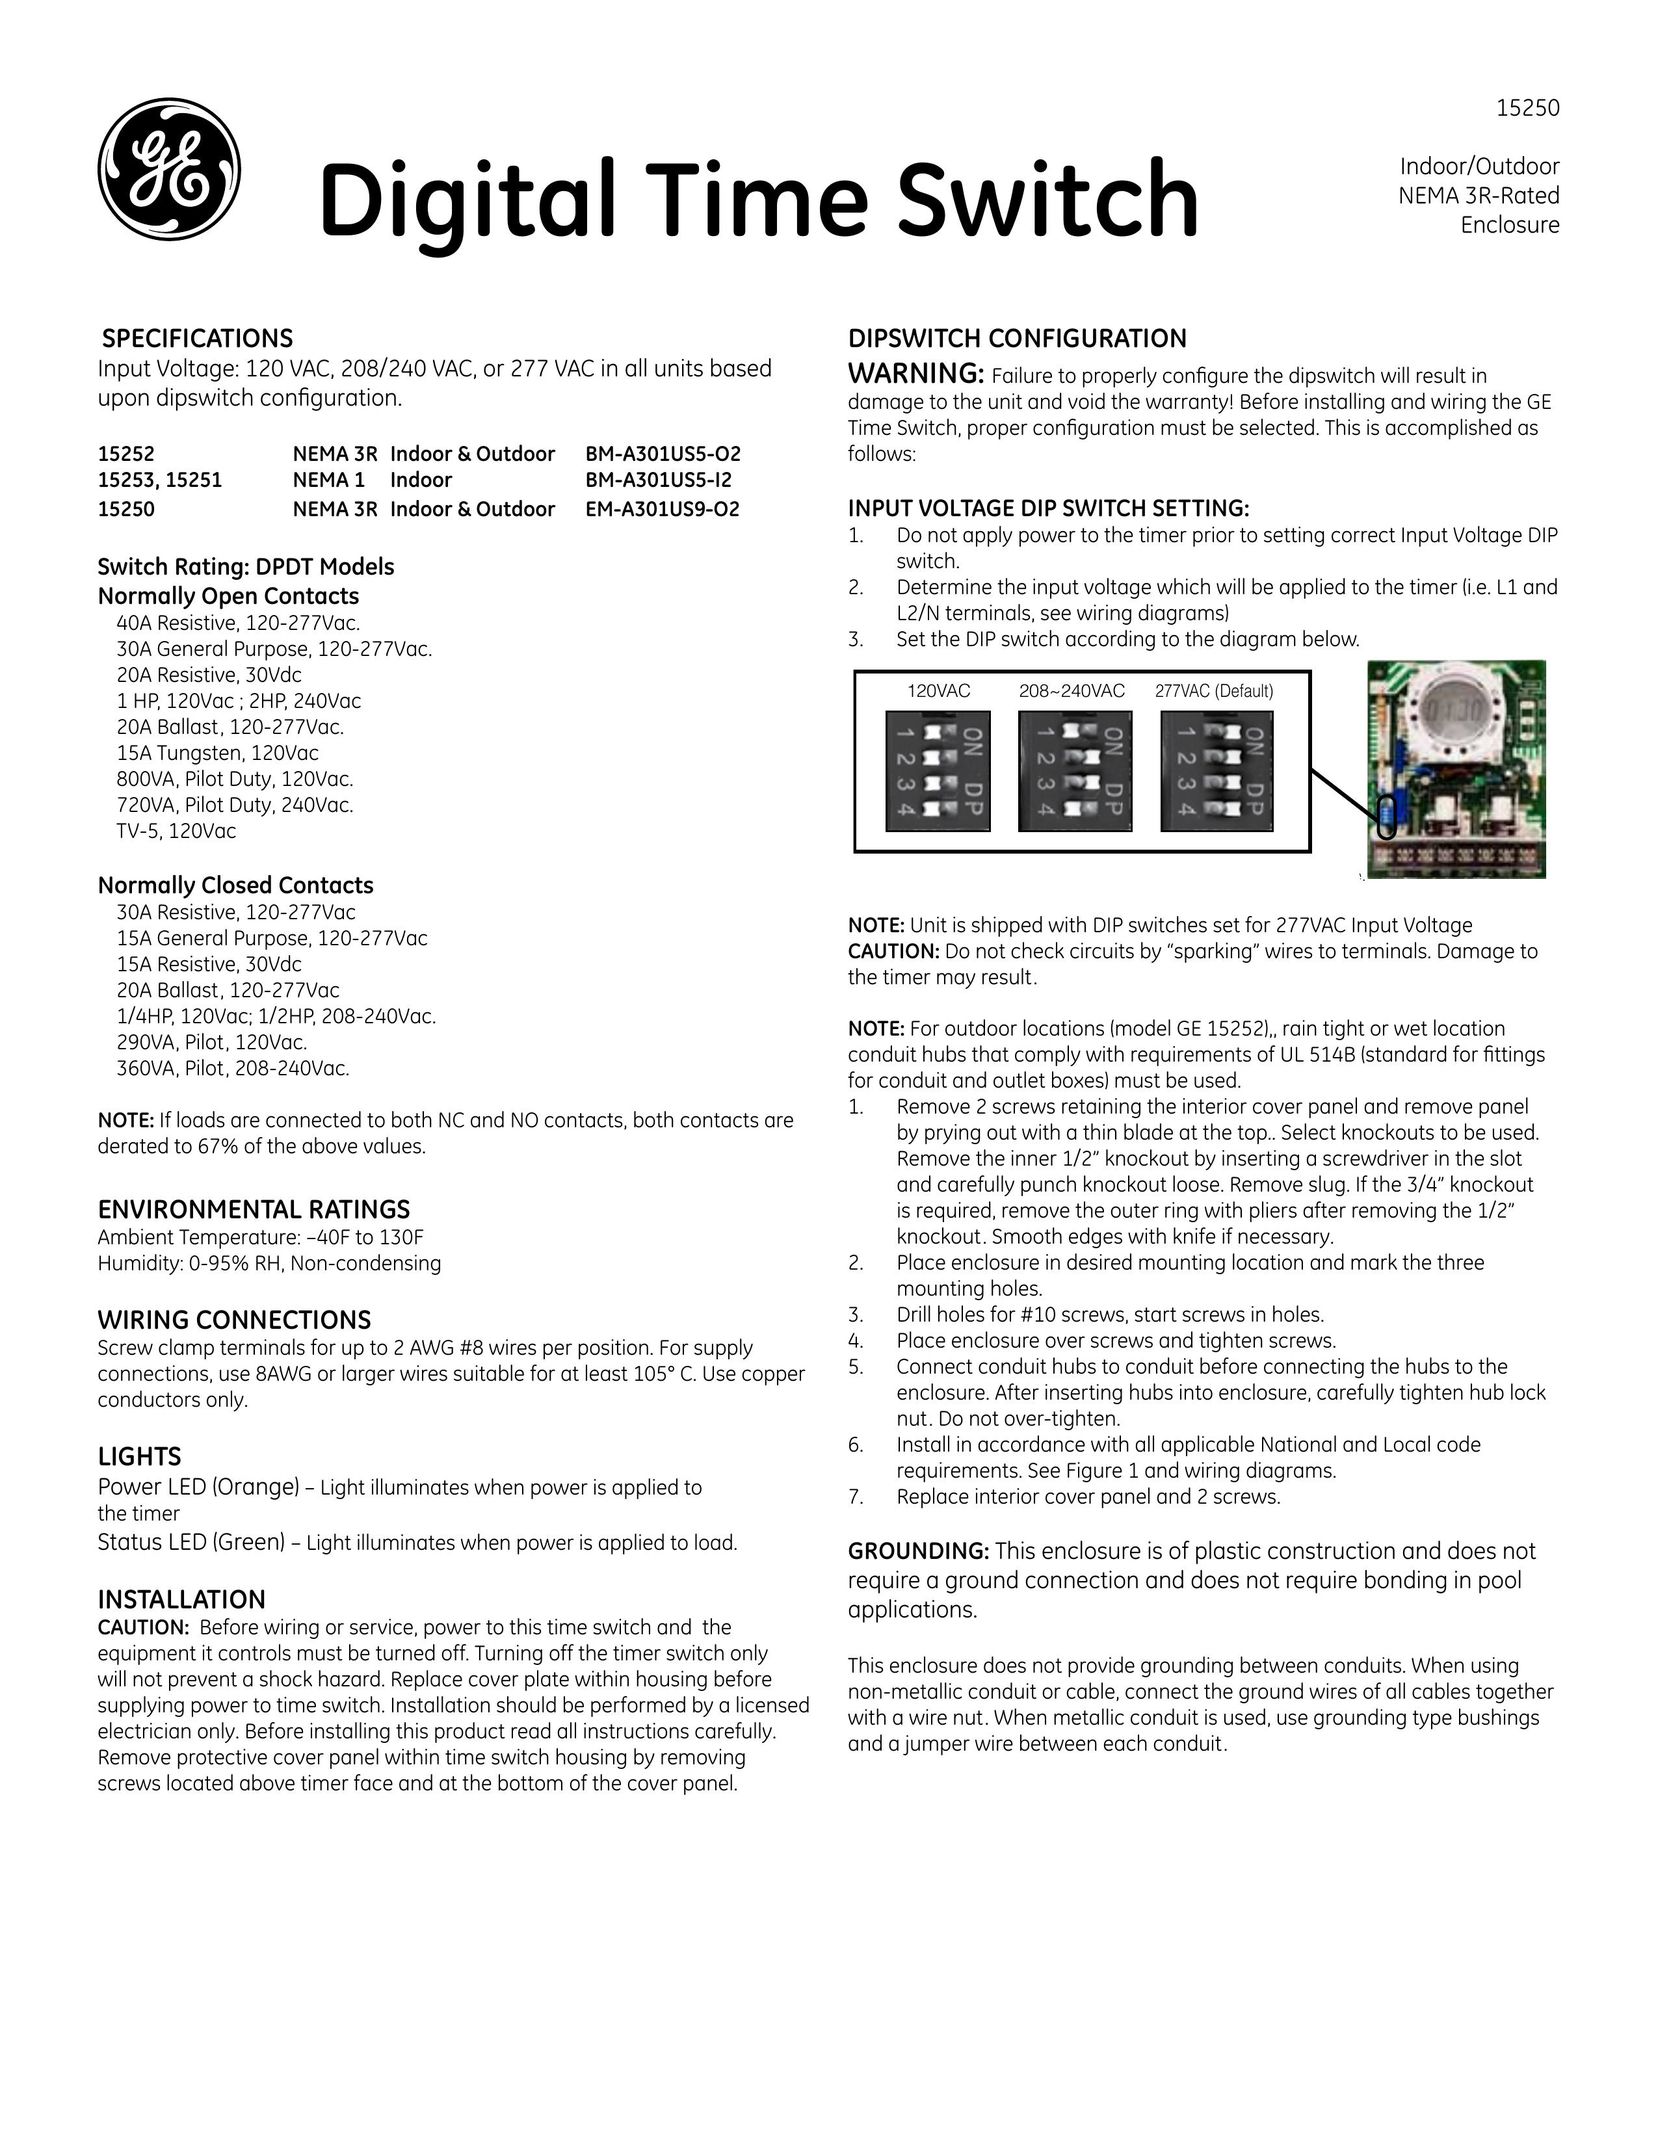 GE EM-A301US9-O2 Switch User Manual